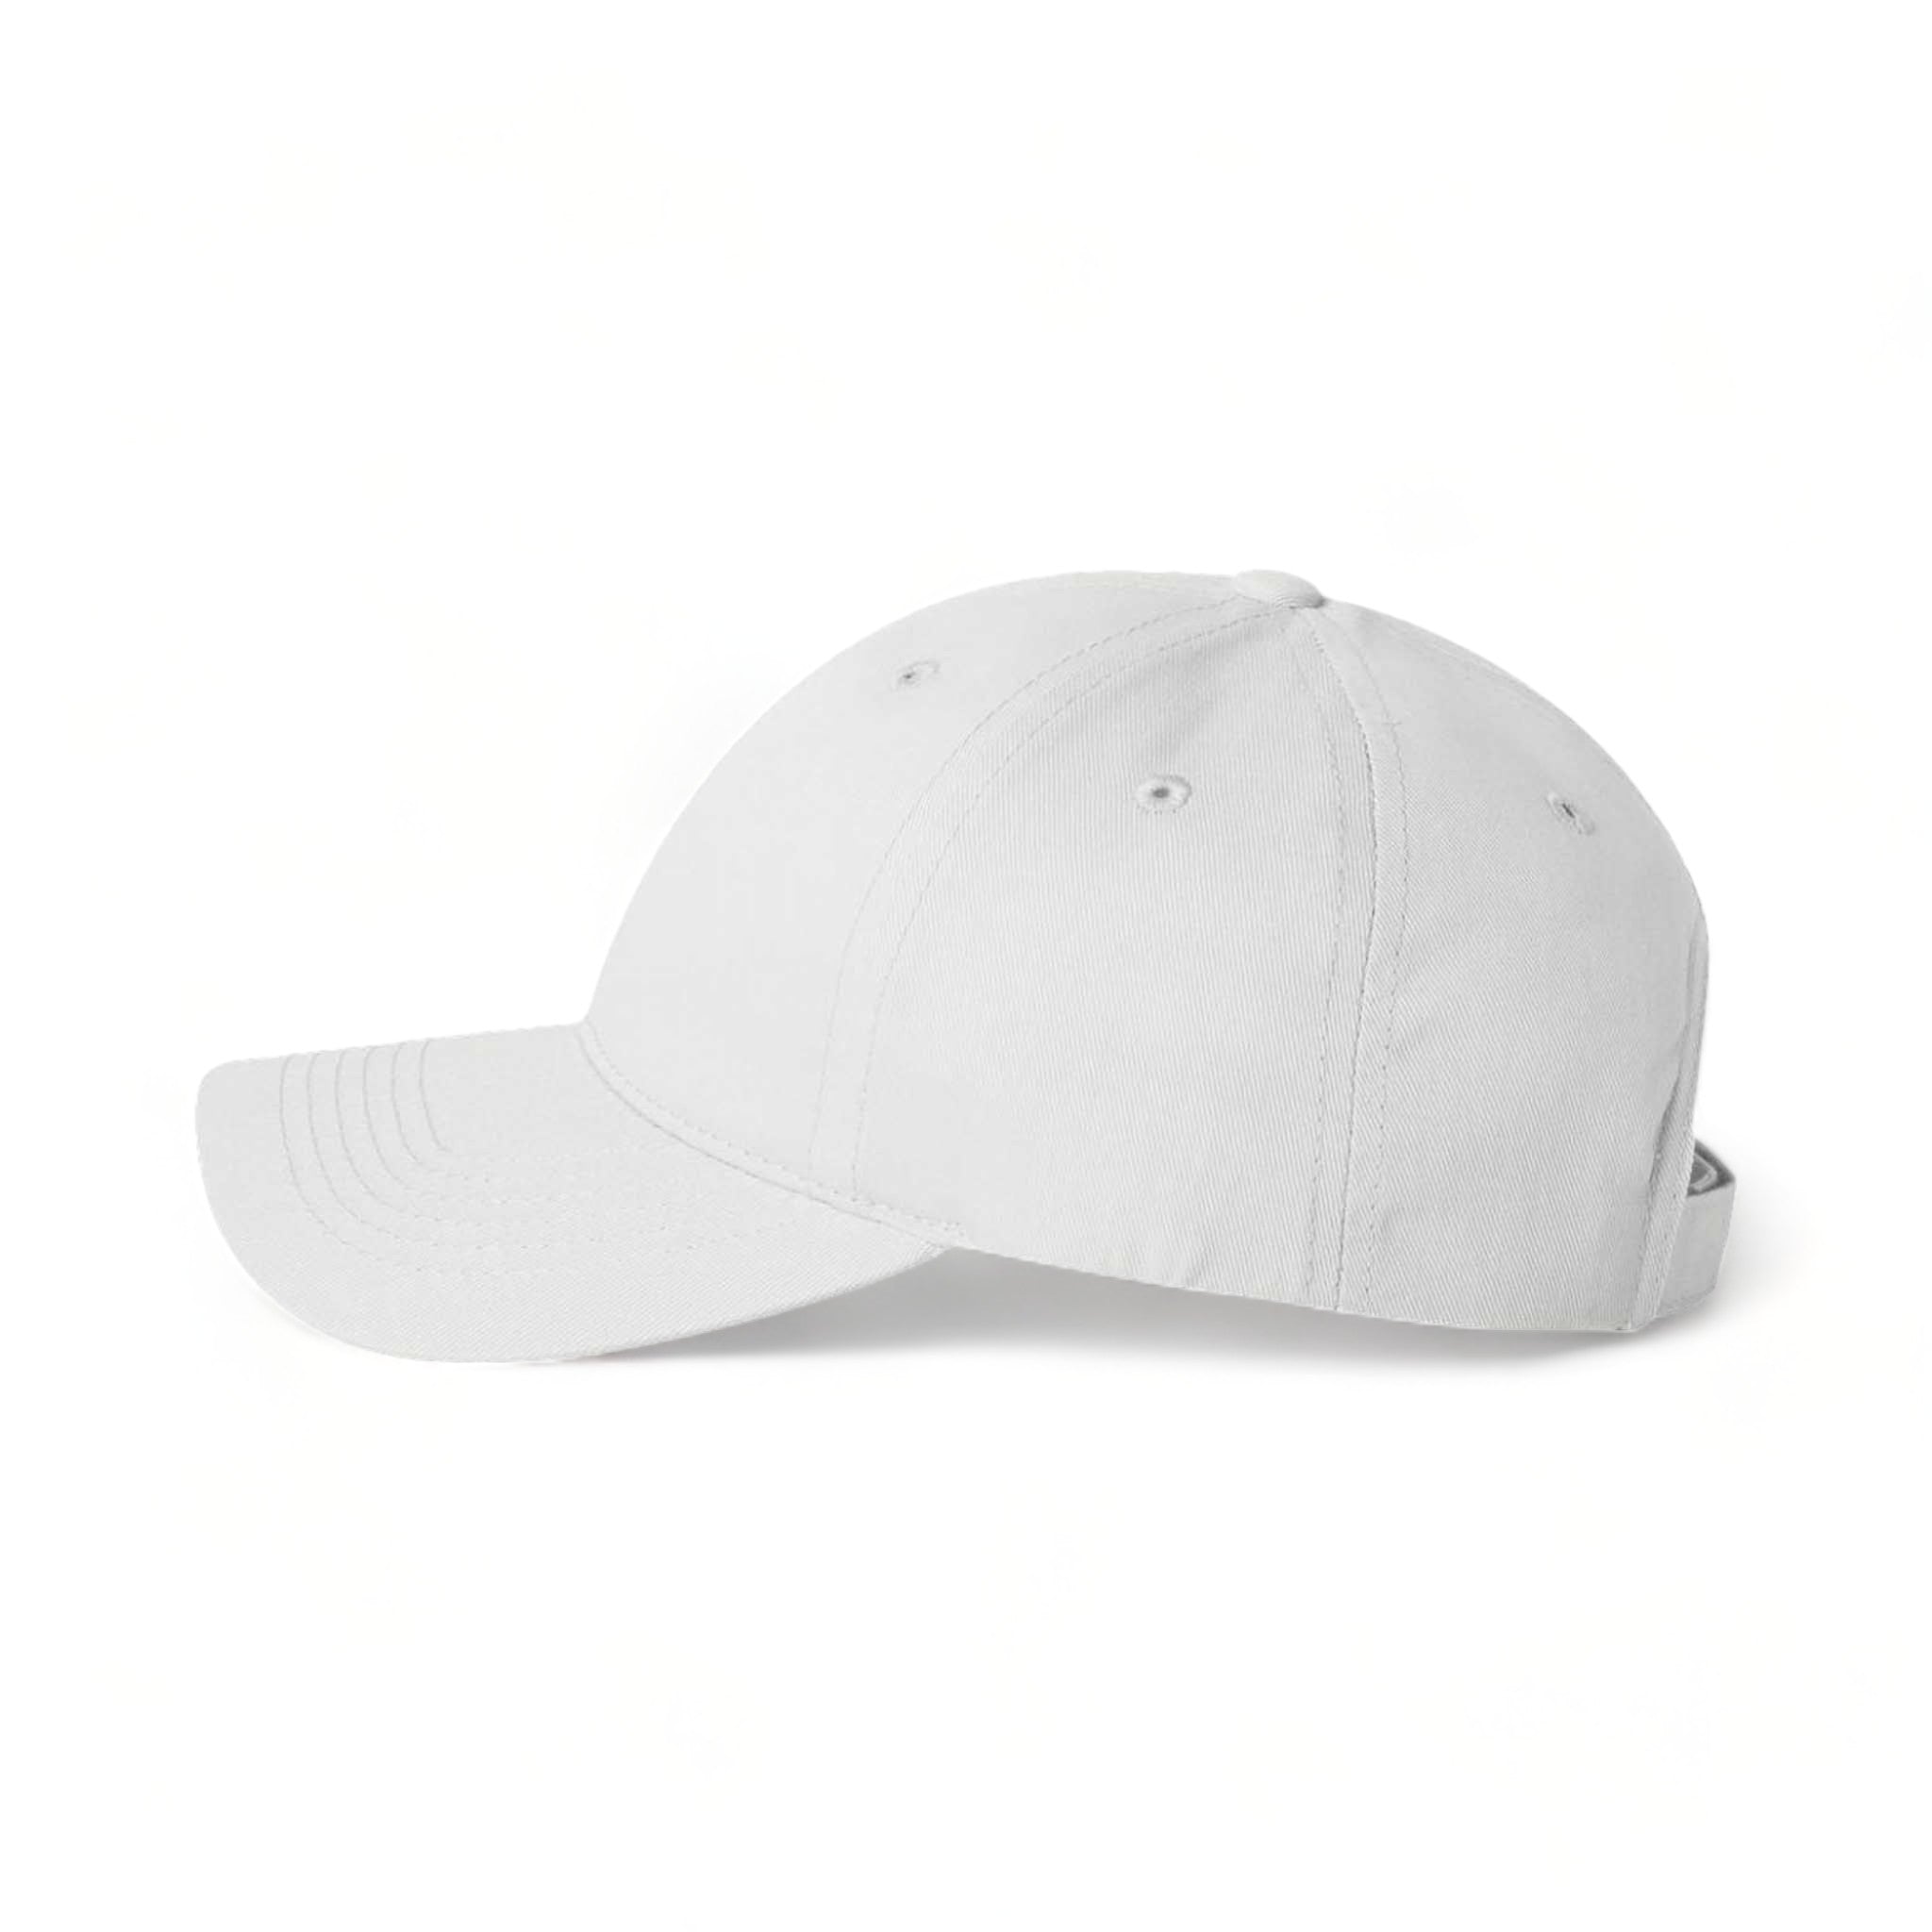 Side view of Sportsman 2260 custom hat in white